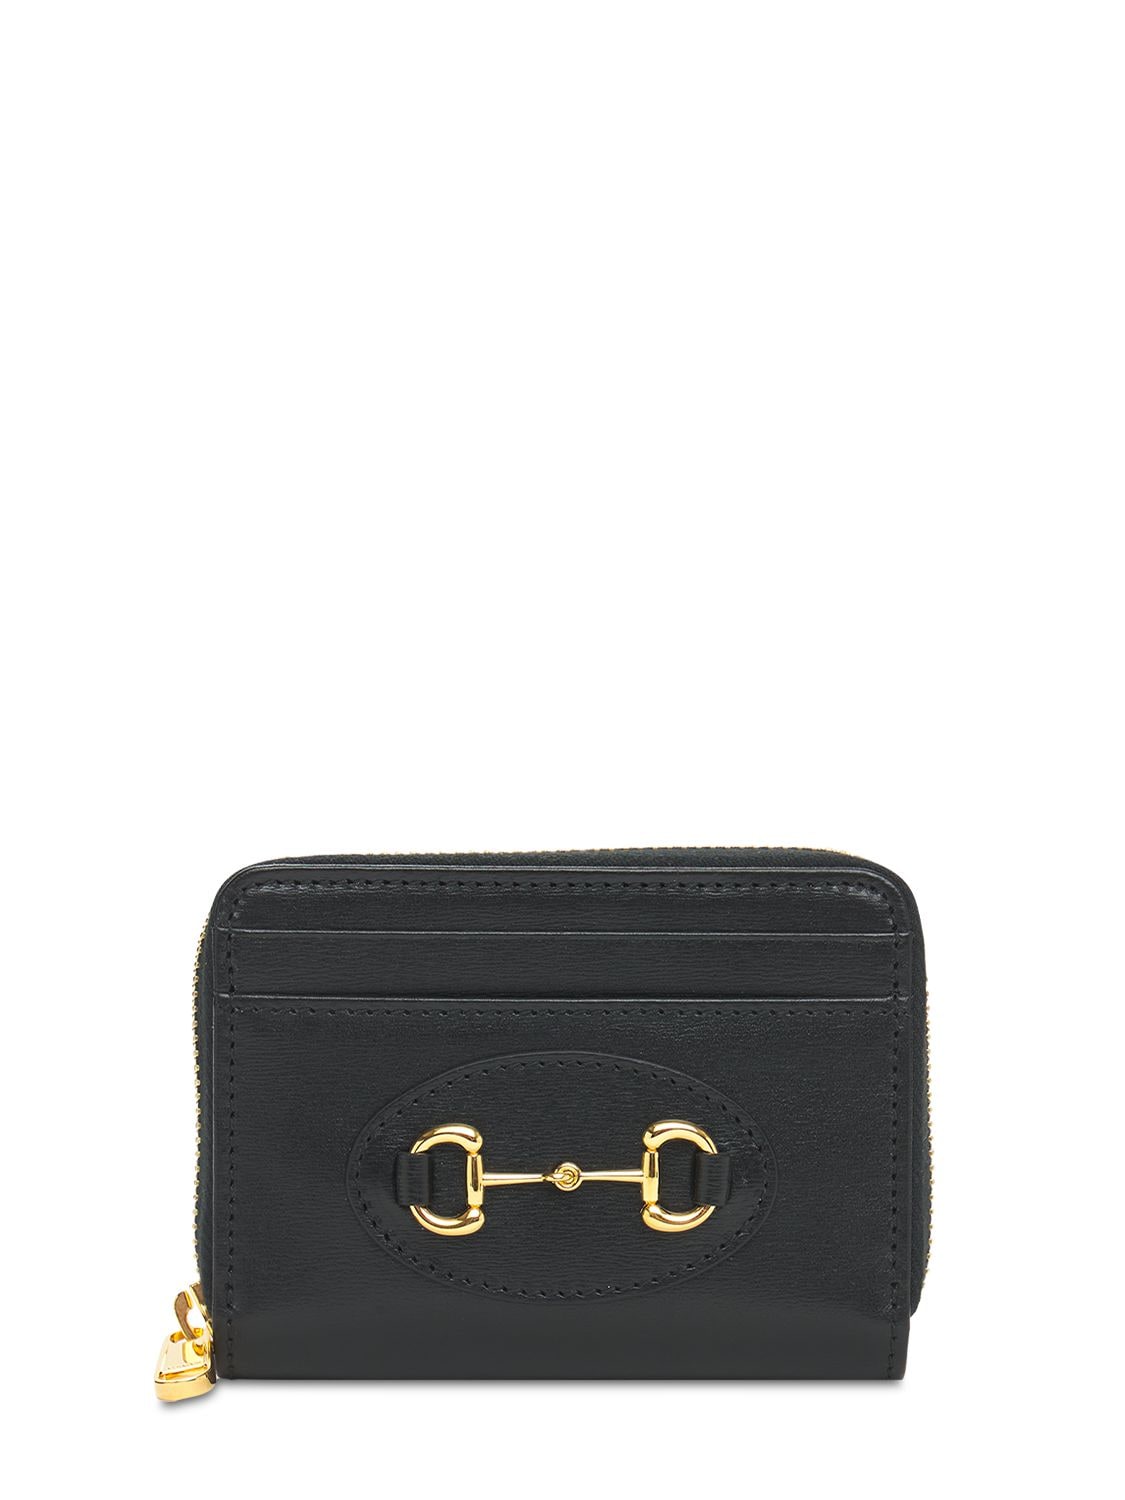 Gucci 1955 Horsebit Card Case Leather Wallet In Black